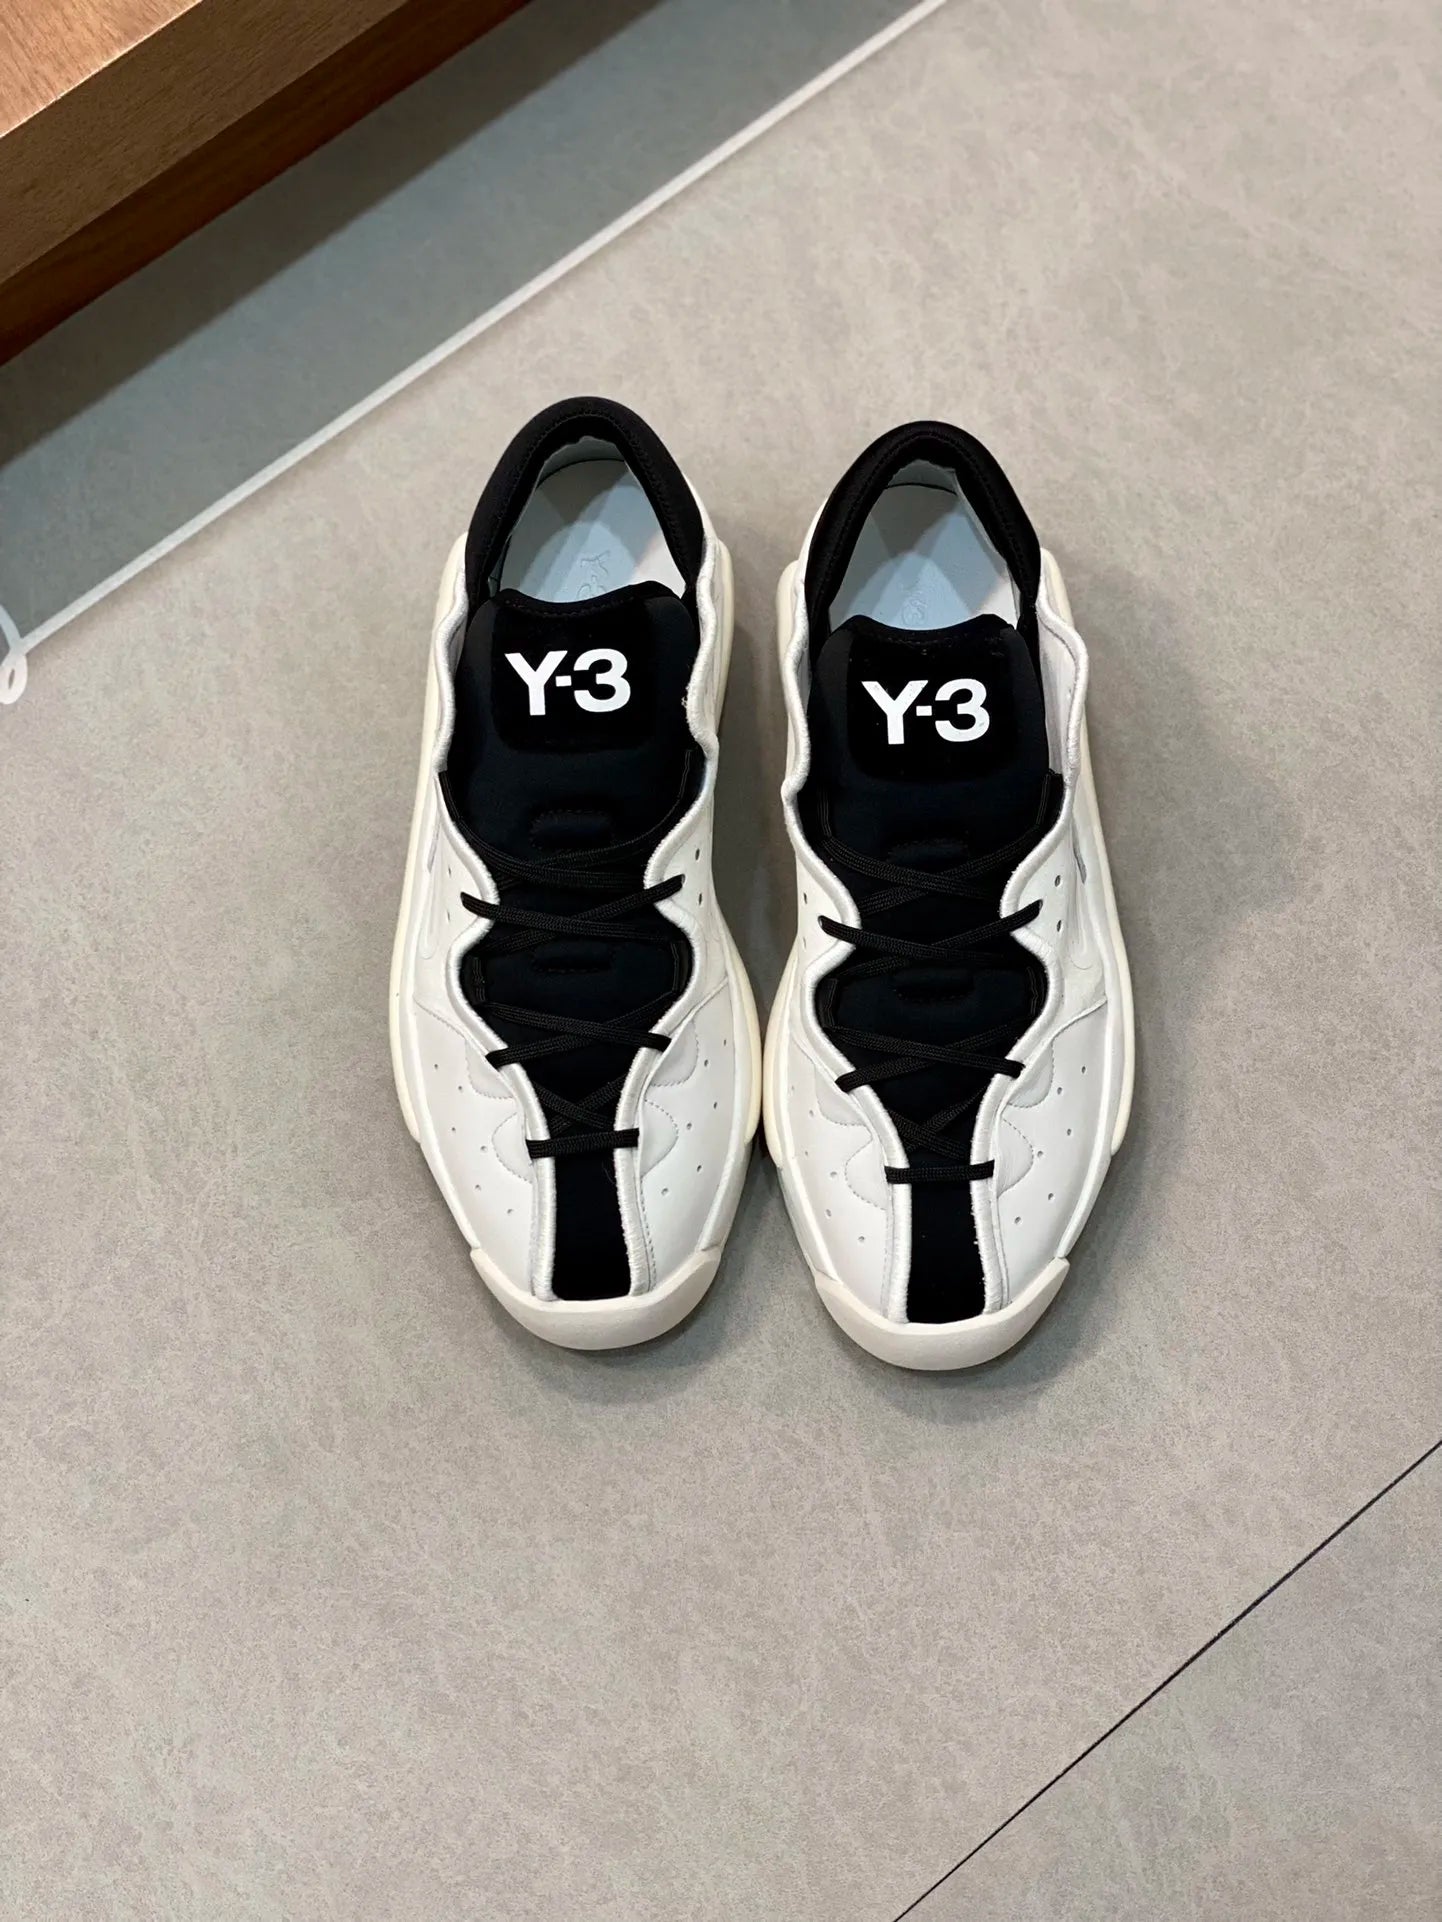 Y3 Yamamoto Yoji Men's Shoes Patchwork y3 Platform Shoes Sports Shoes Daddy Shoes Increase Casual Board Men Sneaker